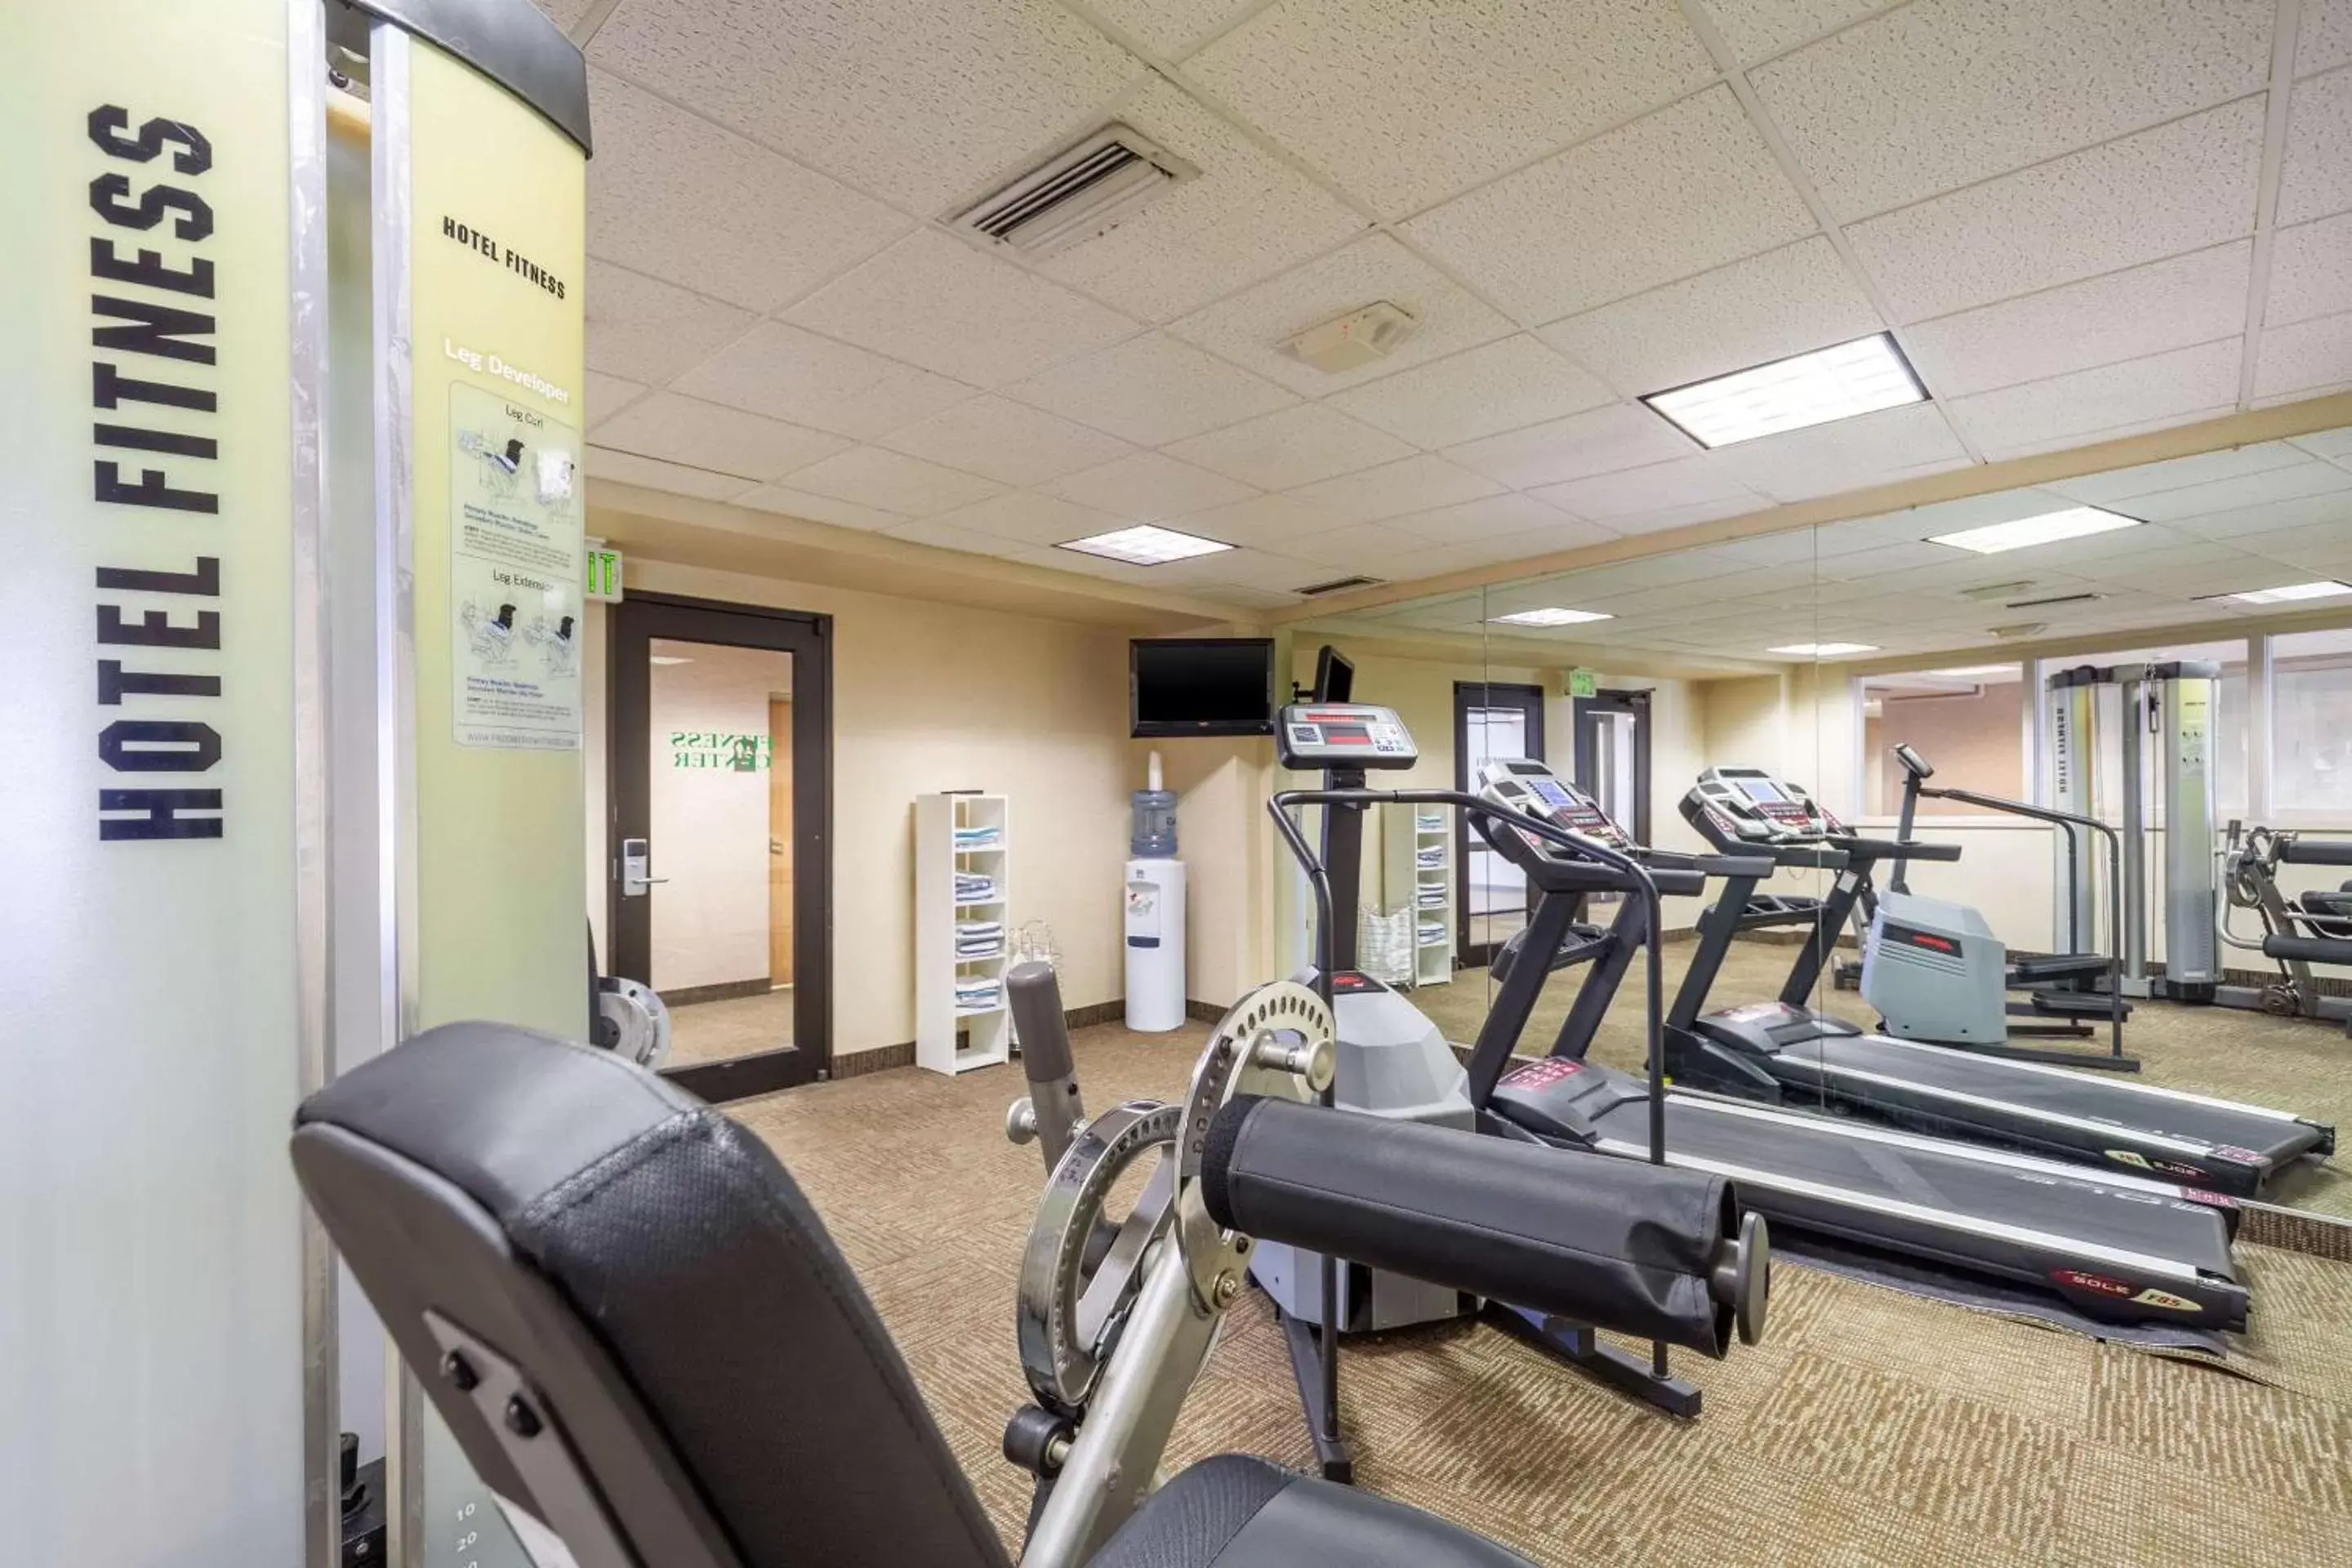 Fitness centre/facilities, Fitness Center/Facilities in Suburban Studios I-80 Grand Island